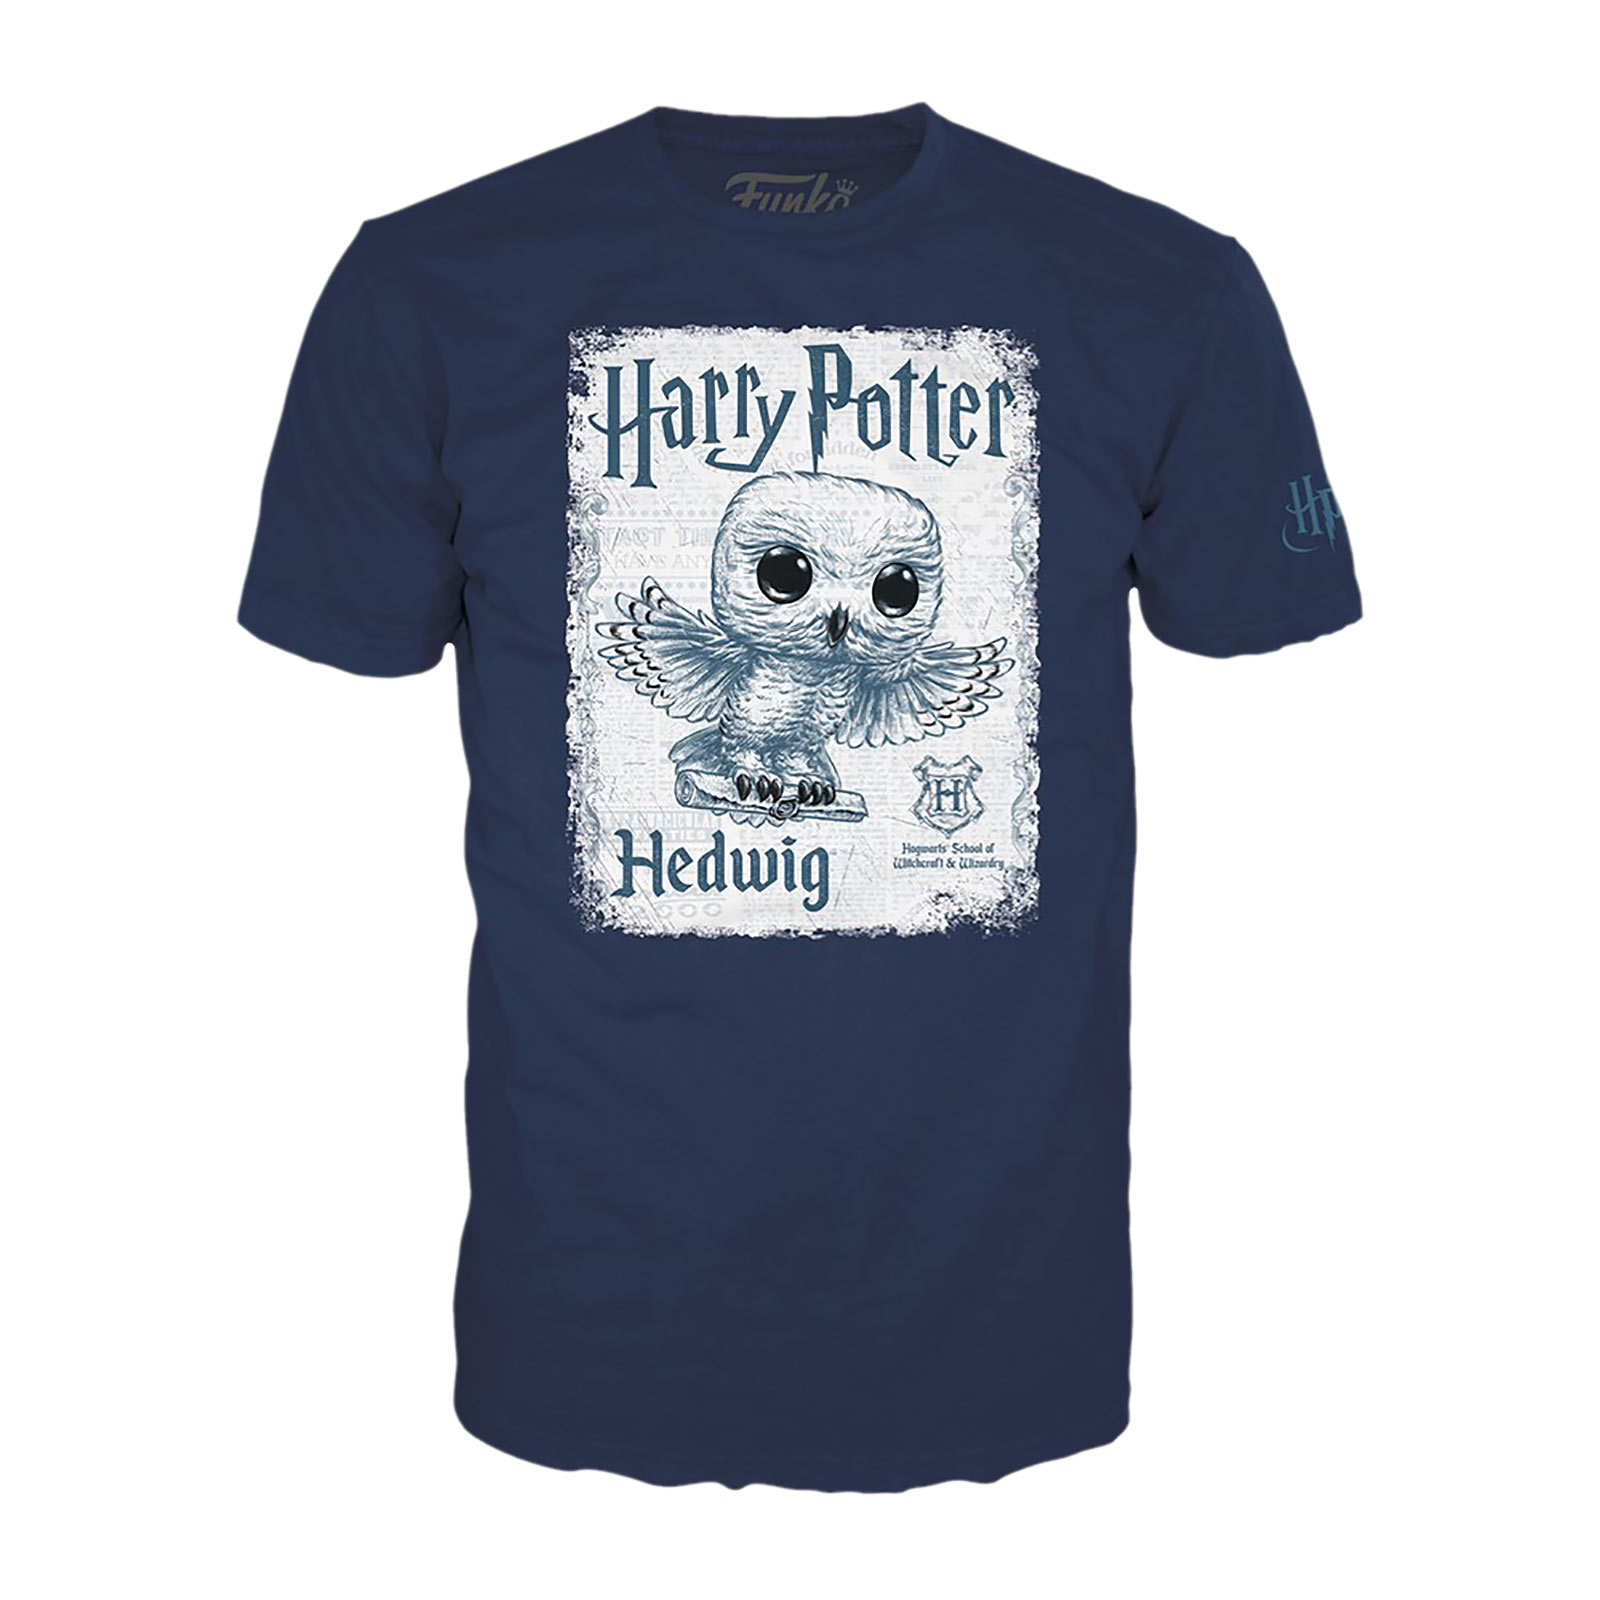 Harry Potter - Hedwig T-Shirt mit Funko Pop Figur